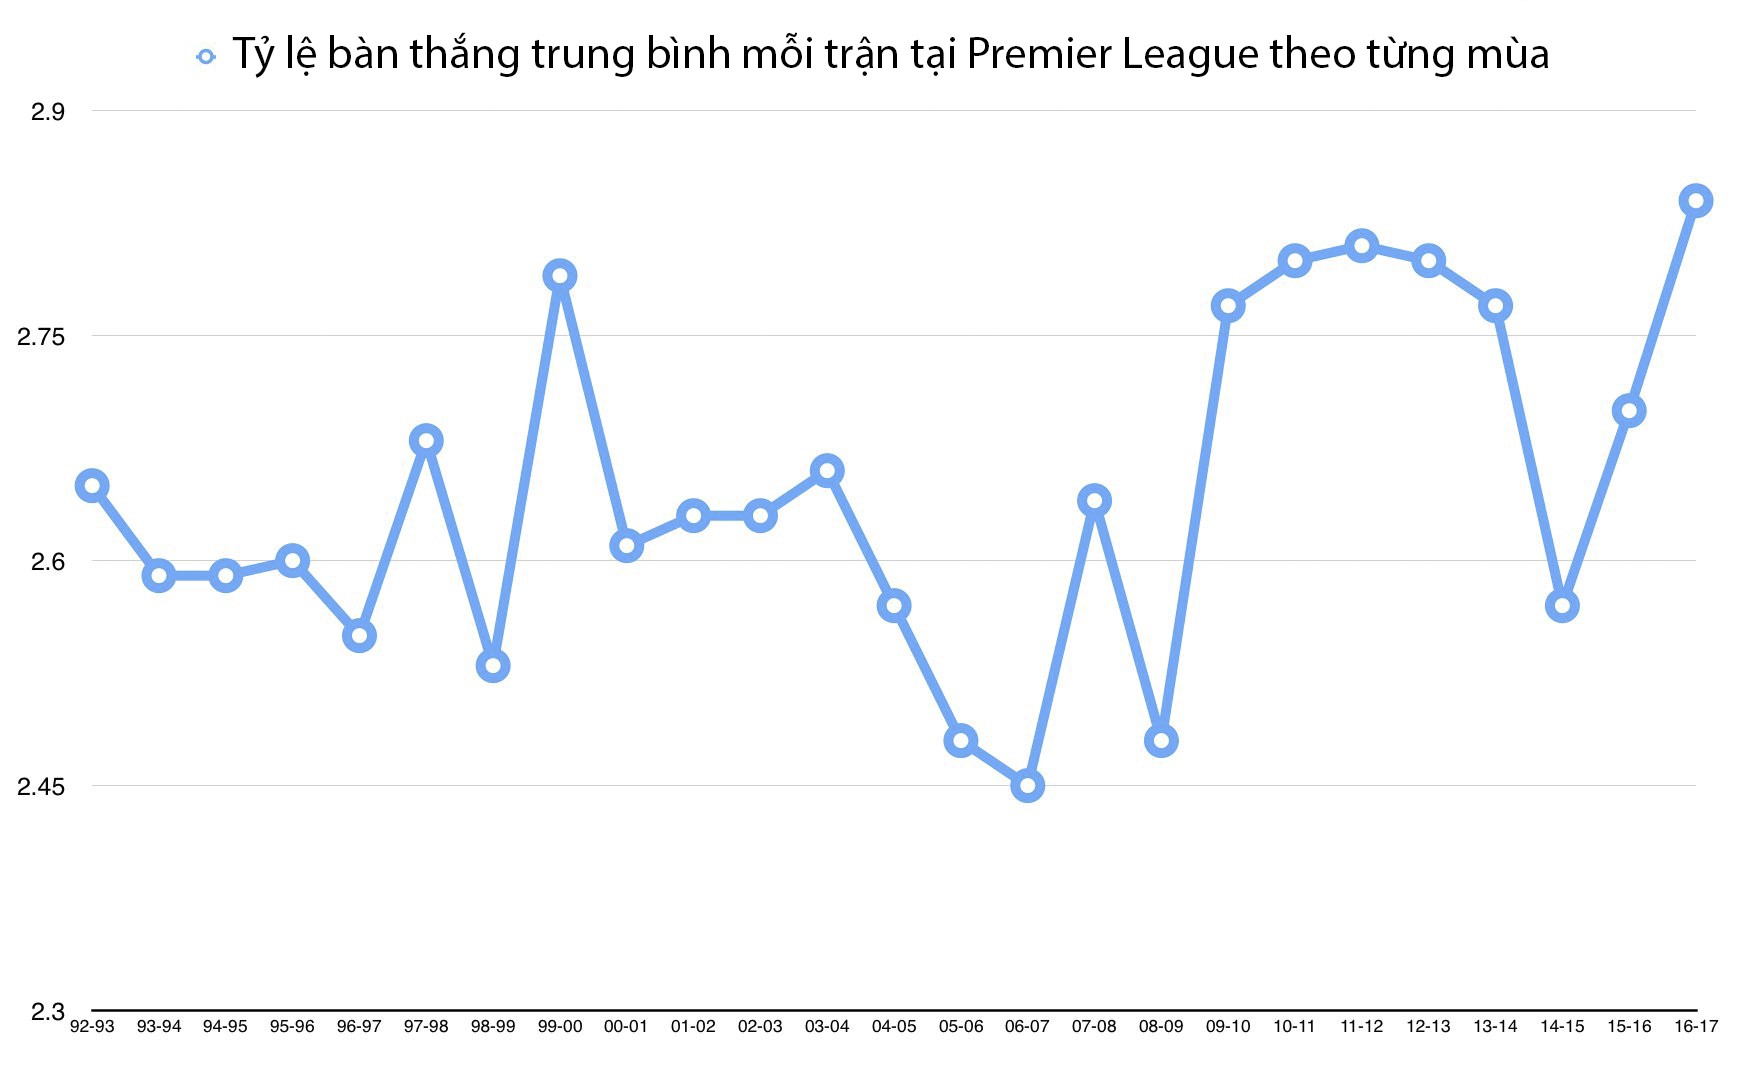 Tỷ lệ ghi bàn theo từng mùa của Premier League